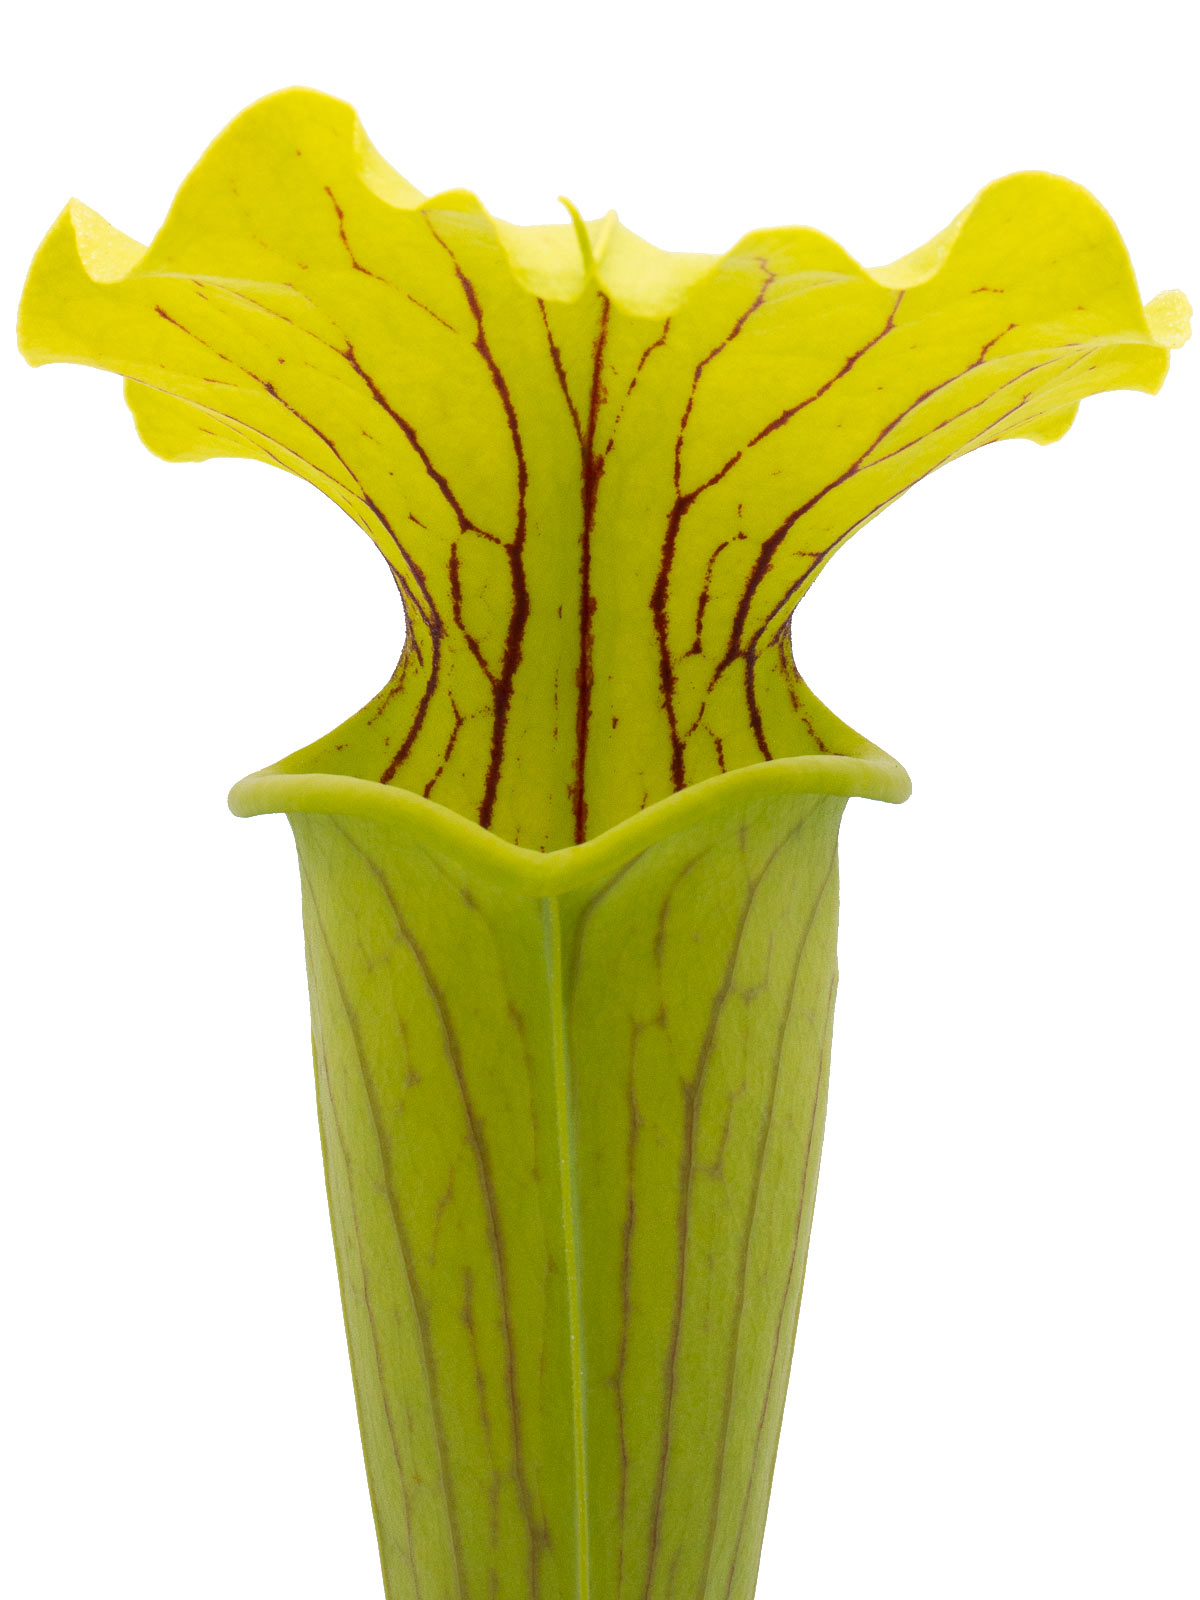 Sarracenia alata x flava var. maxima - Giant form